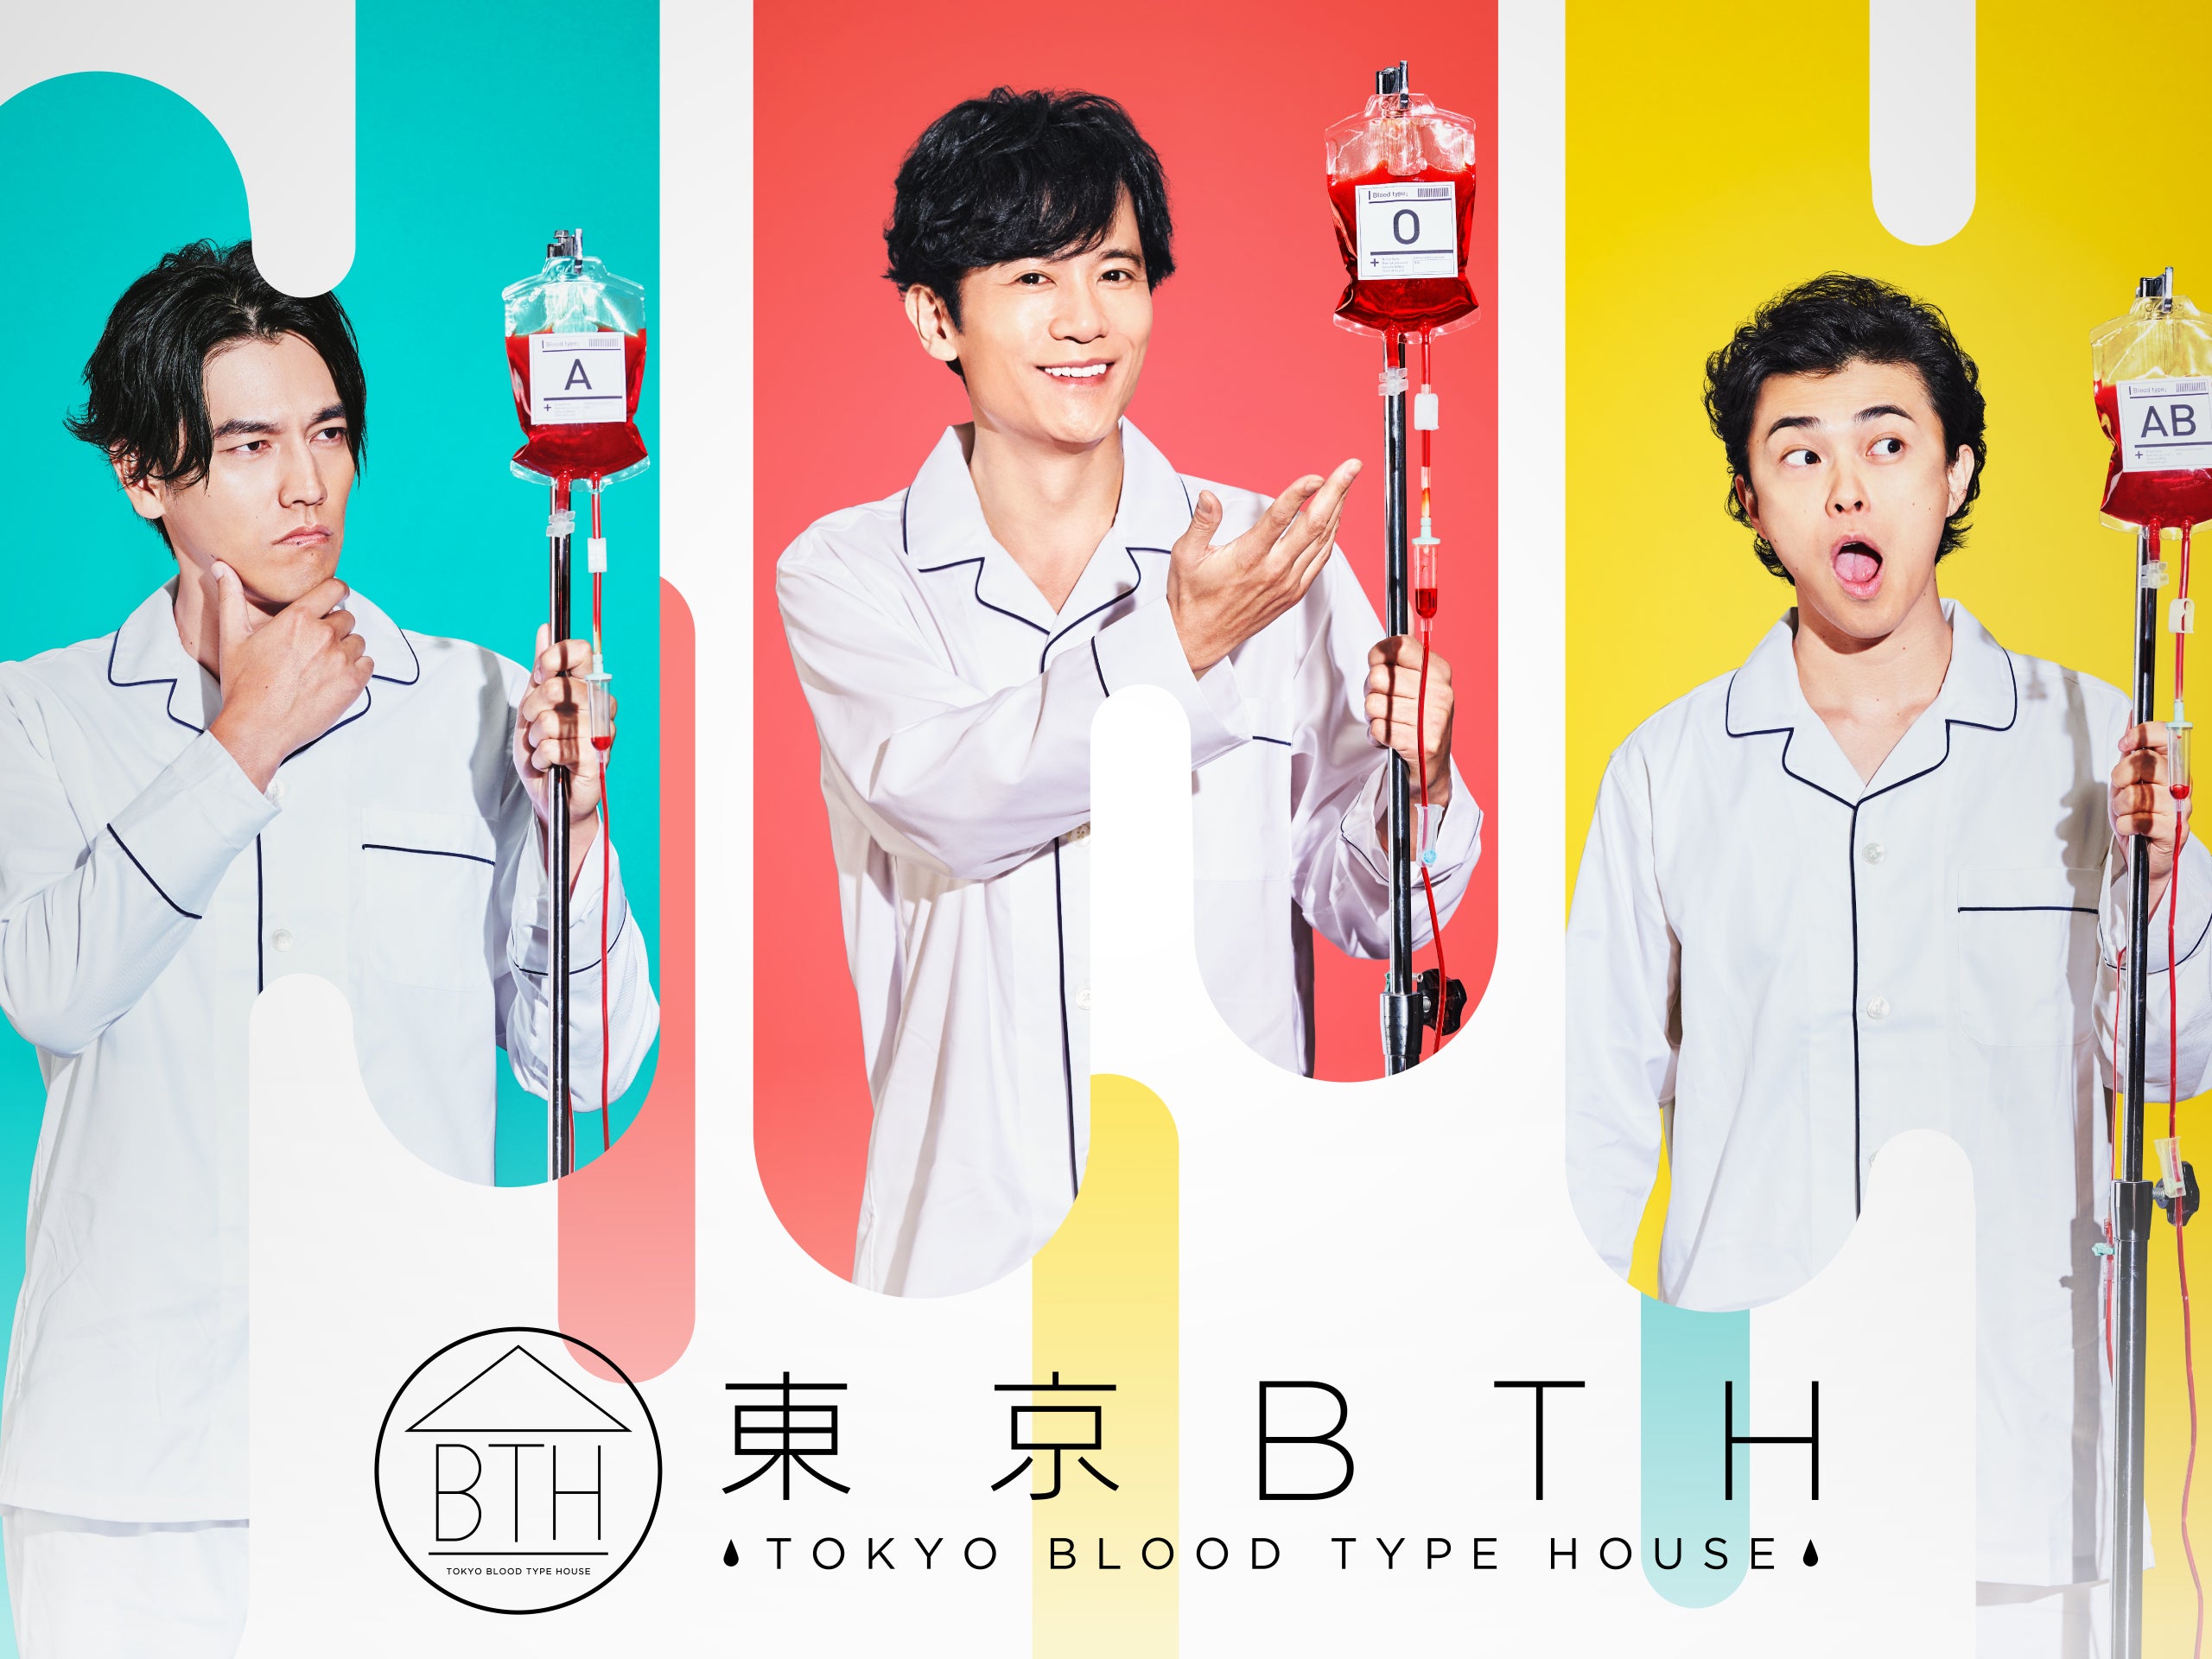 TV ratings for Tokyo Bth: Tokyo Blood Type House (東京BTH〜TOKYO BLOOD TYPE HOUSE〜) in the United Kingdom. Amazon Prime Video TV series